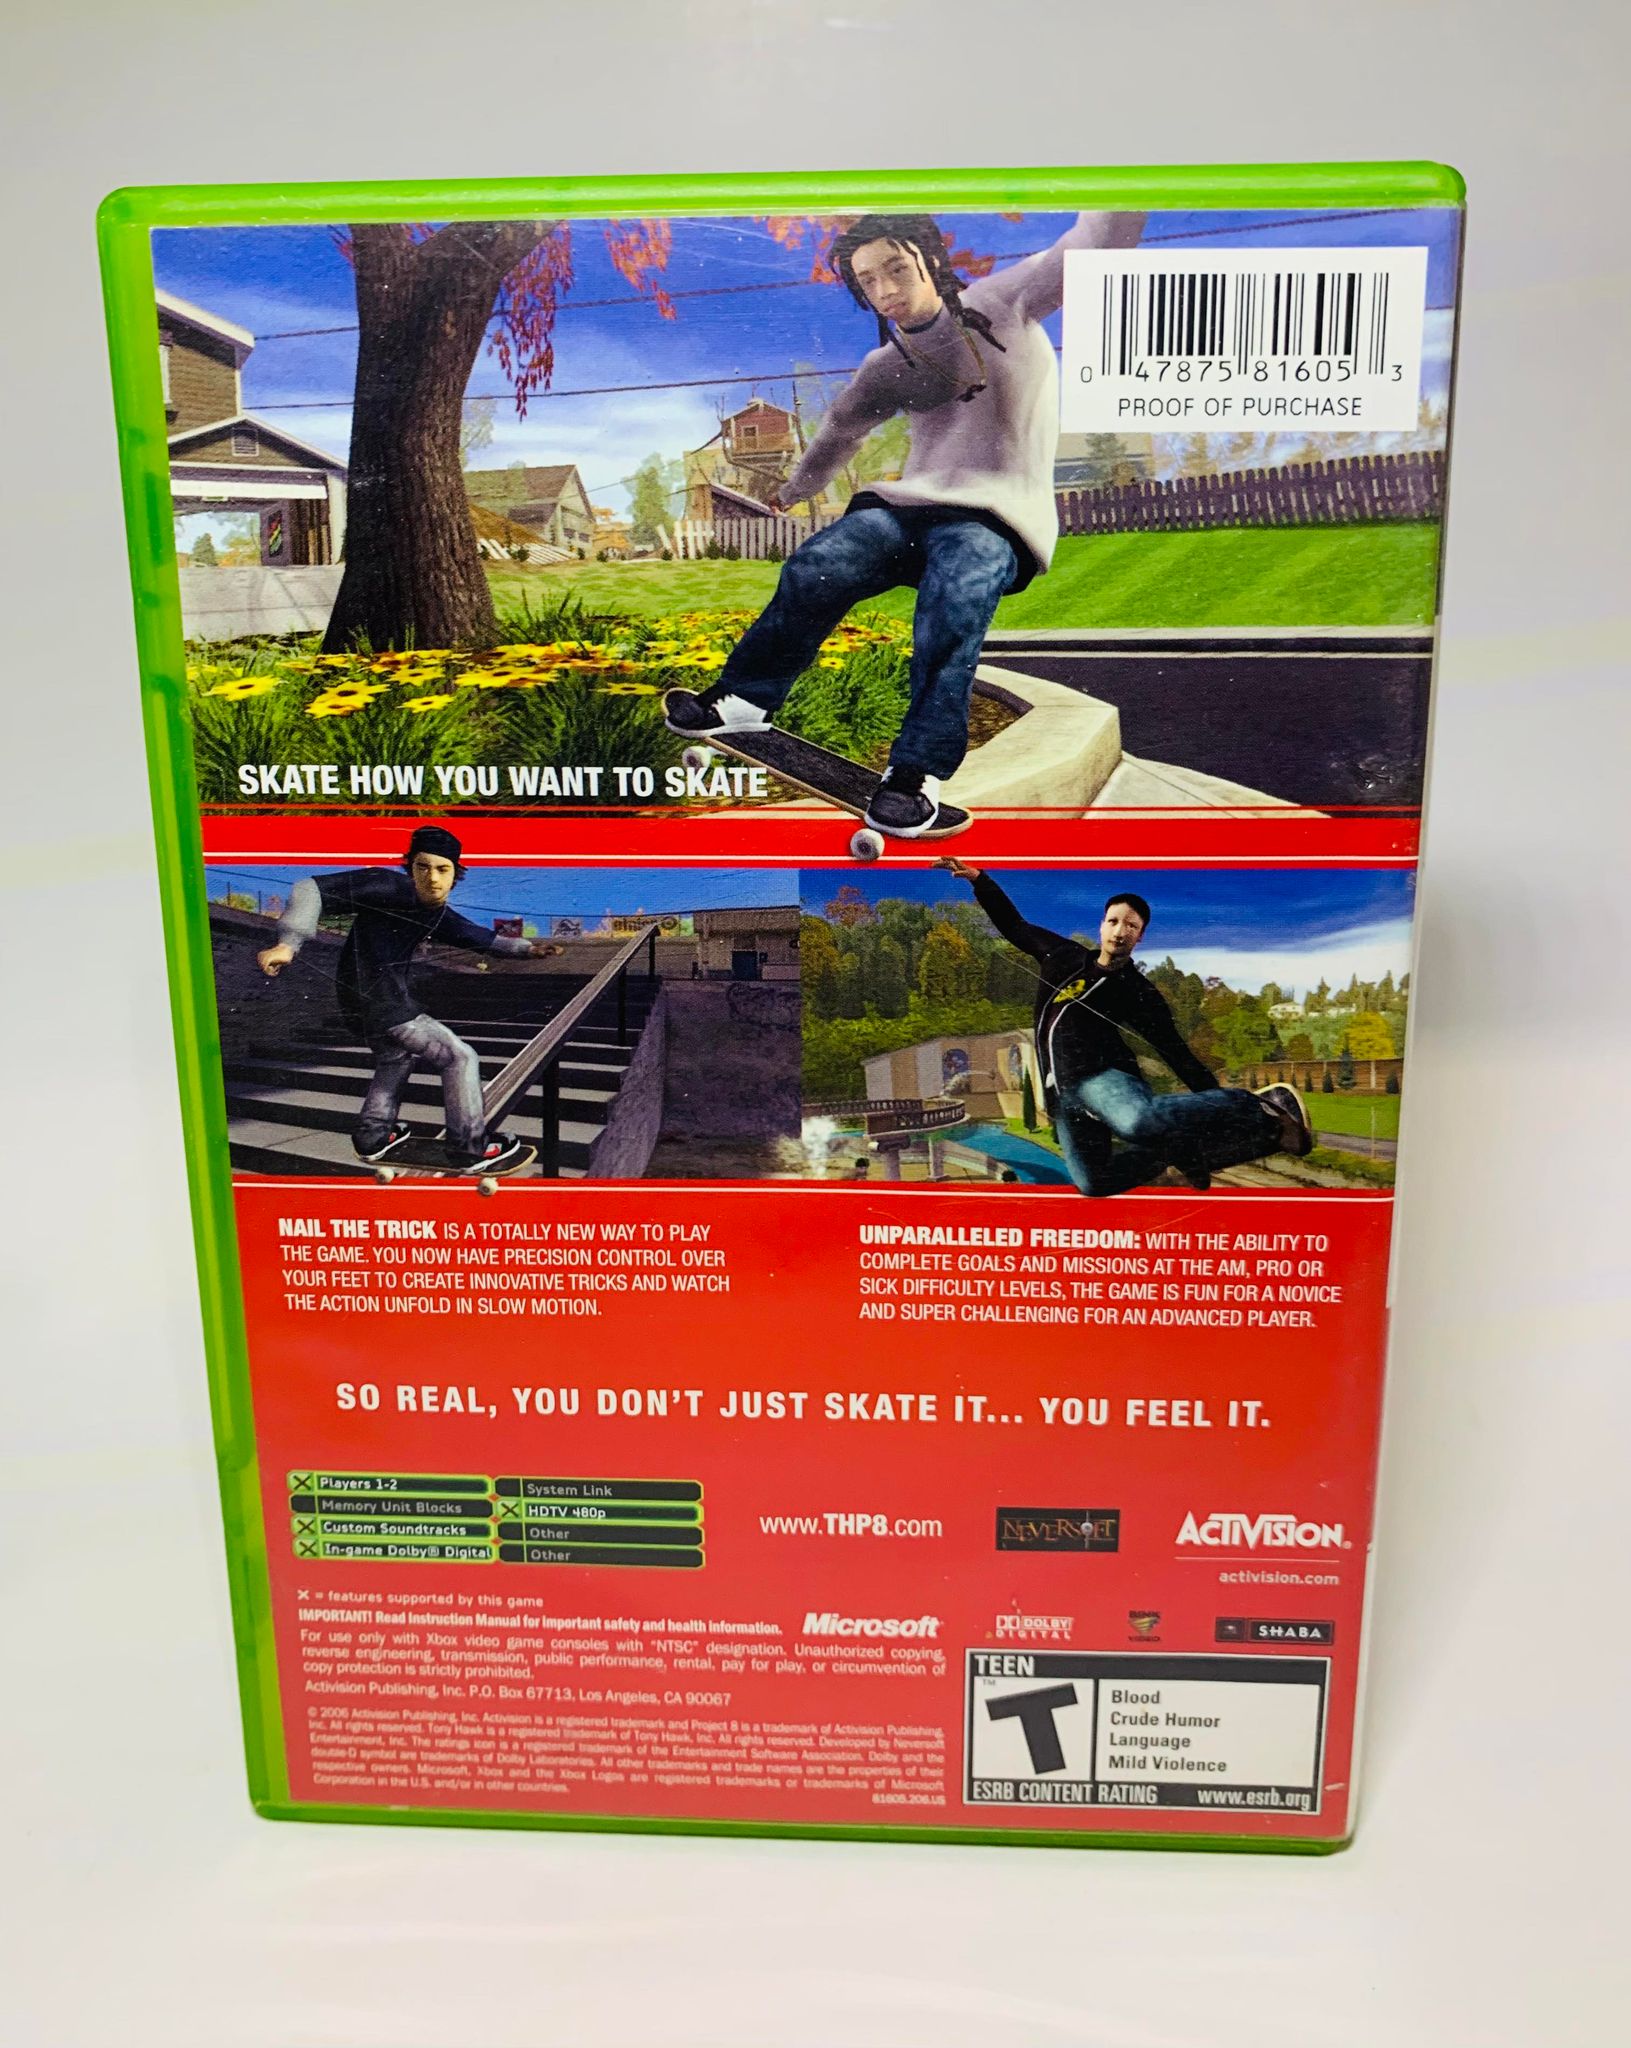 TONY HAWK'S PROJECT 8 XBOX - jeux video game-x